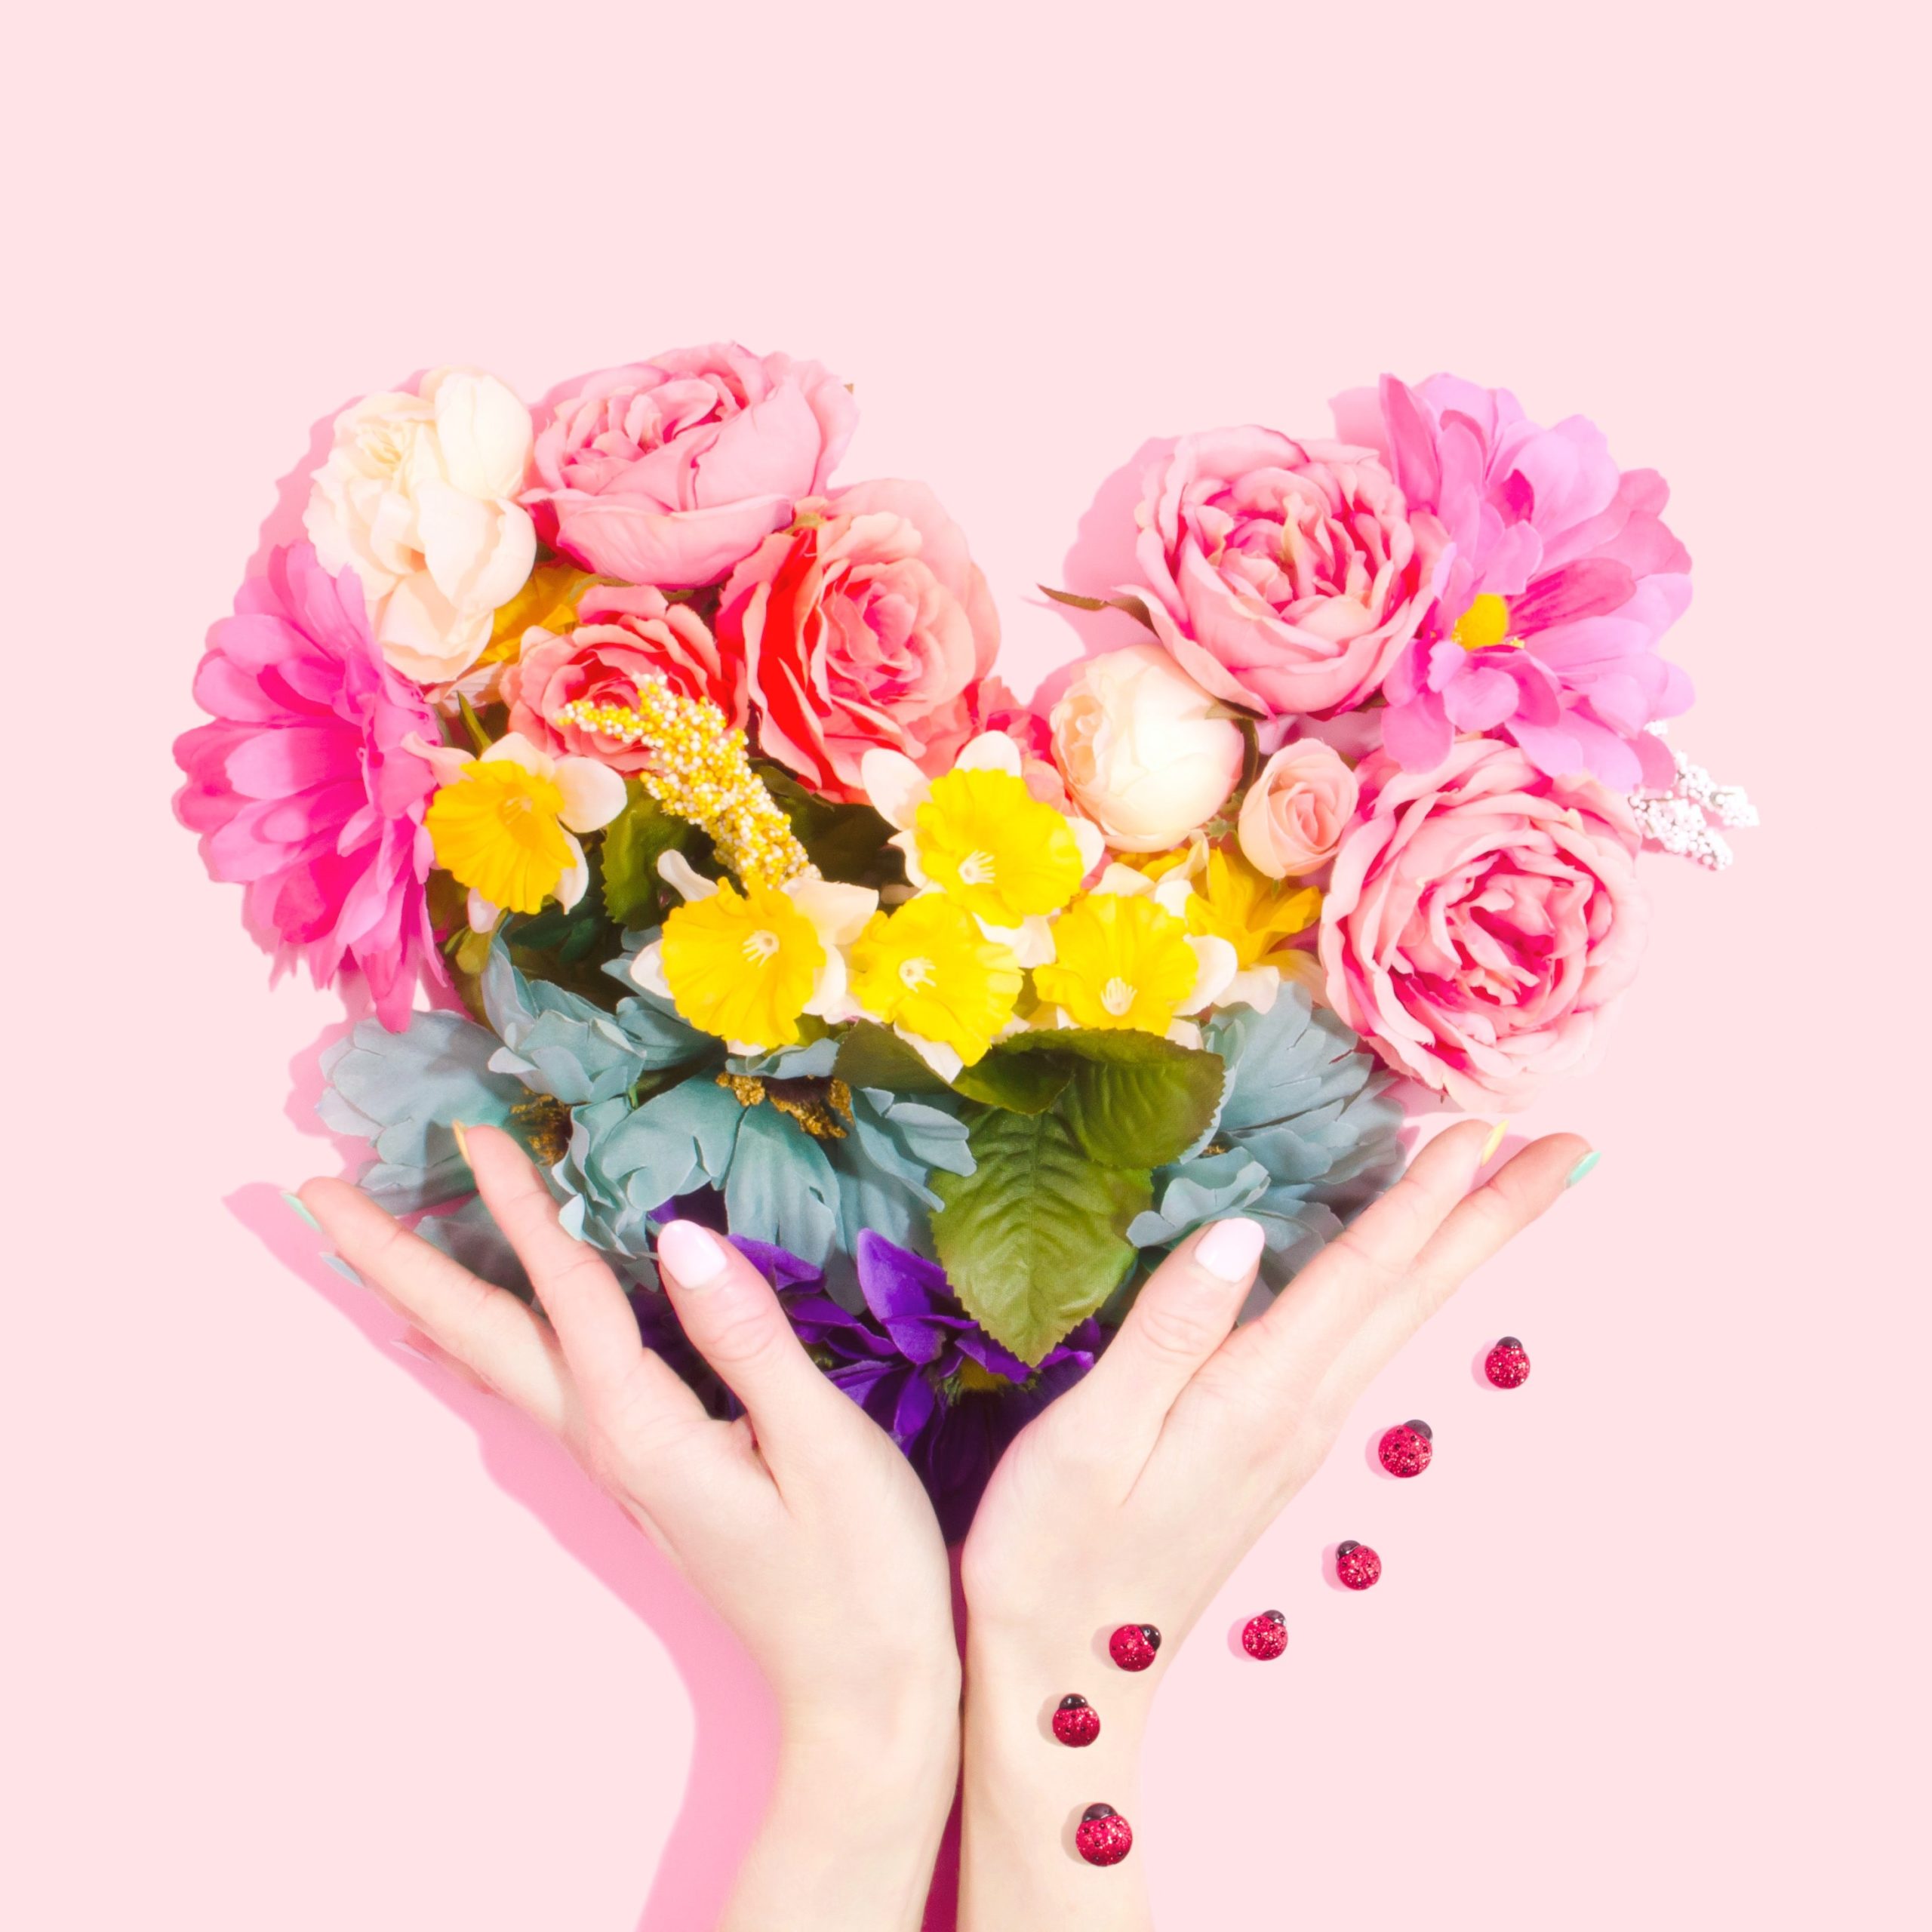 <img src="colourful.jpg" alt="colourful valentines flower heart"/> 